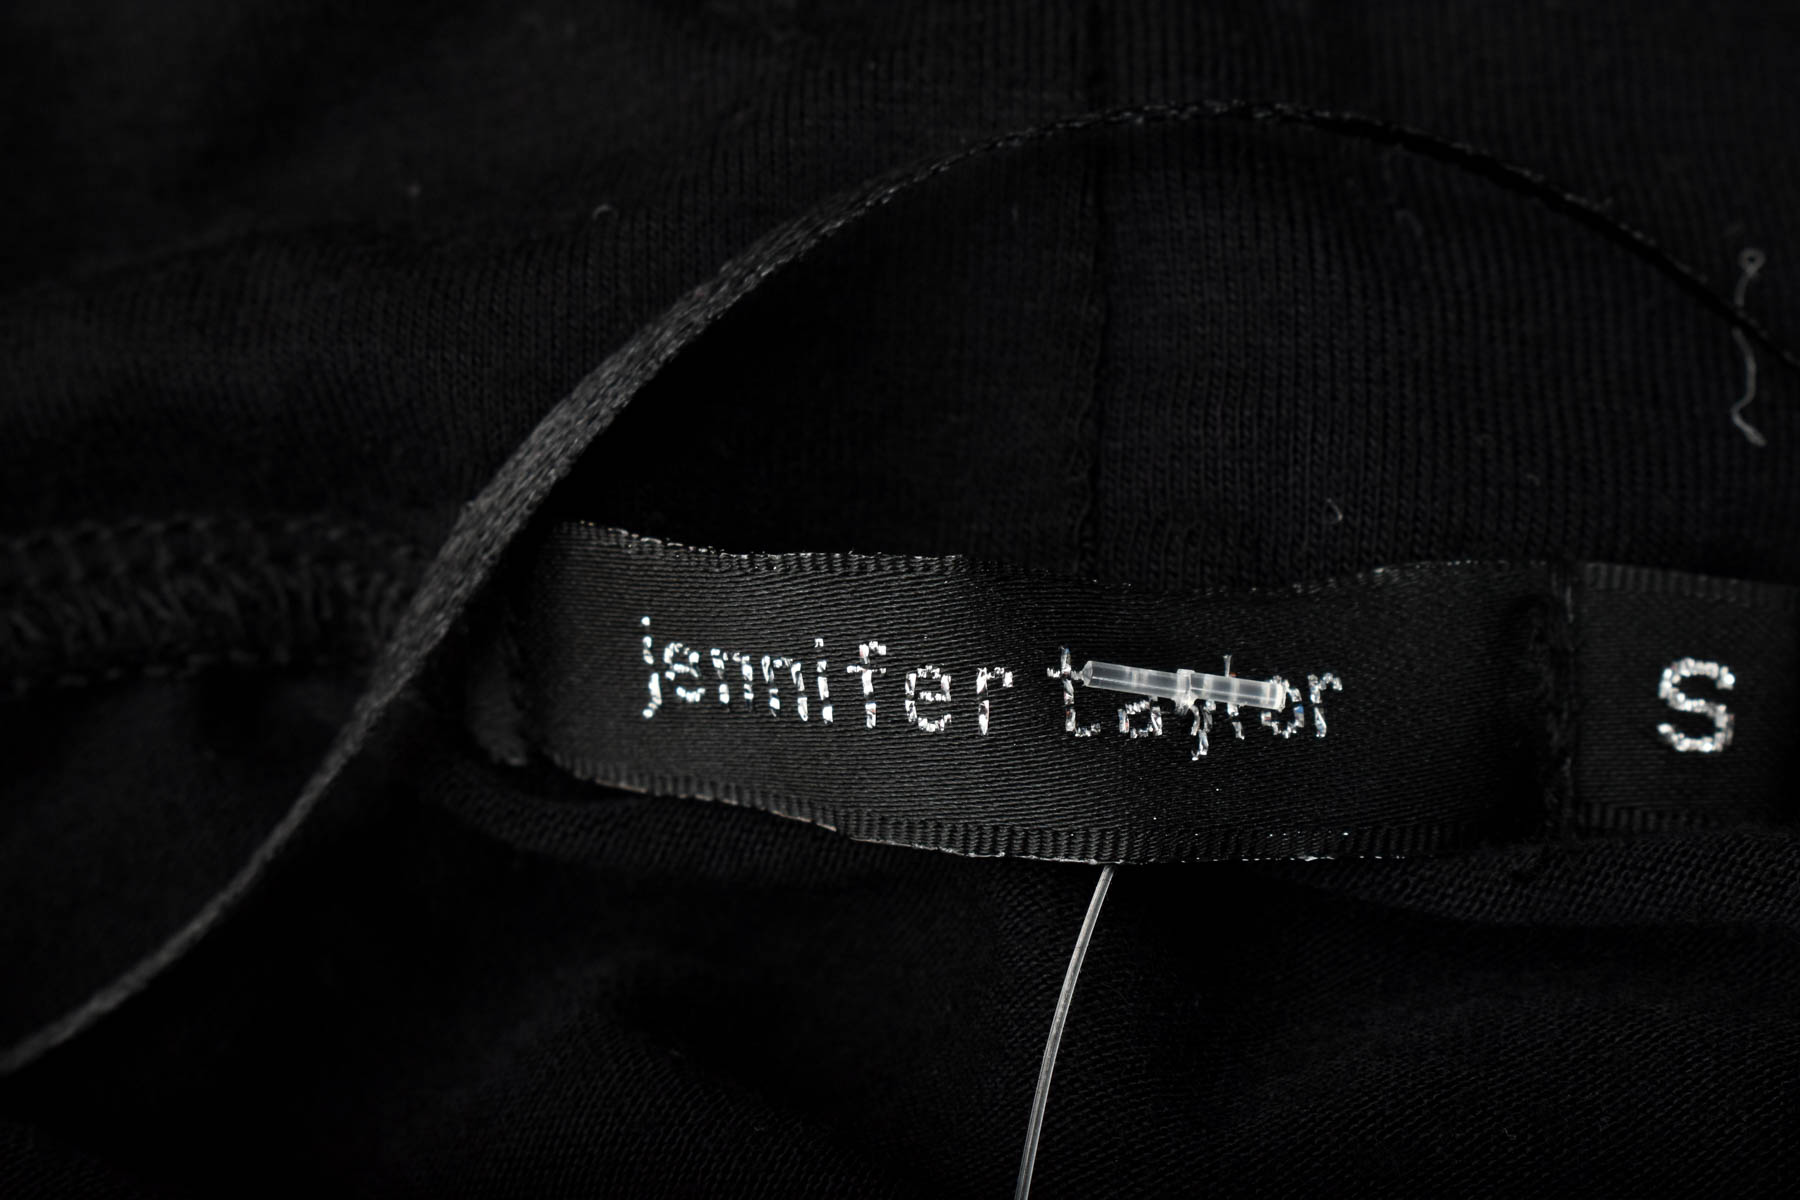 Rękawy - Jennifer Taylor - 2